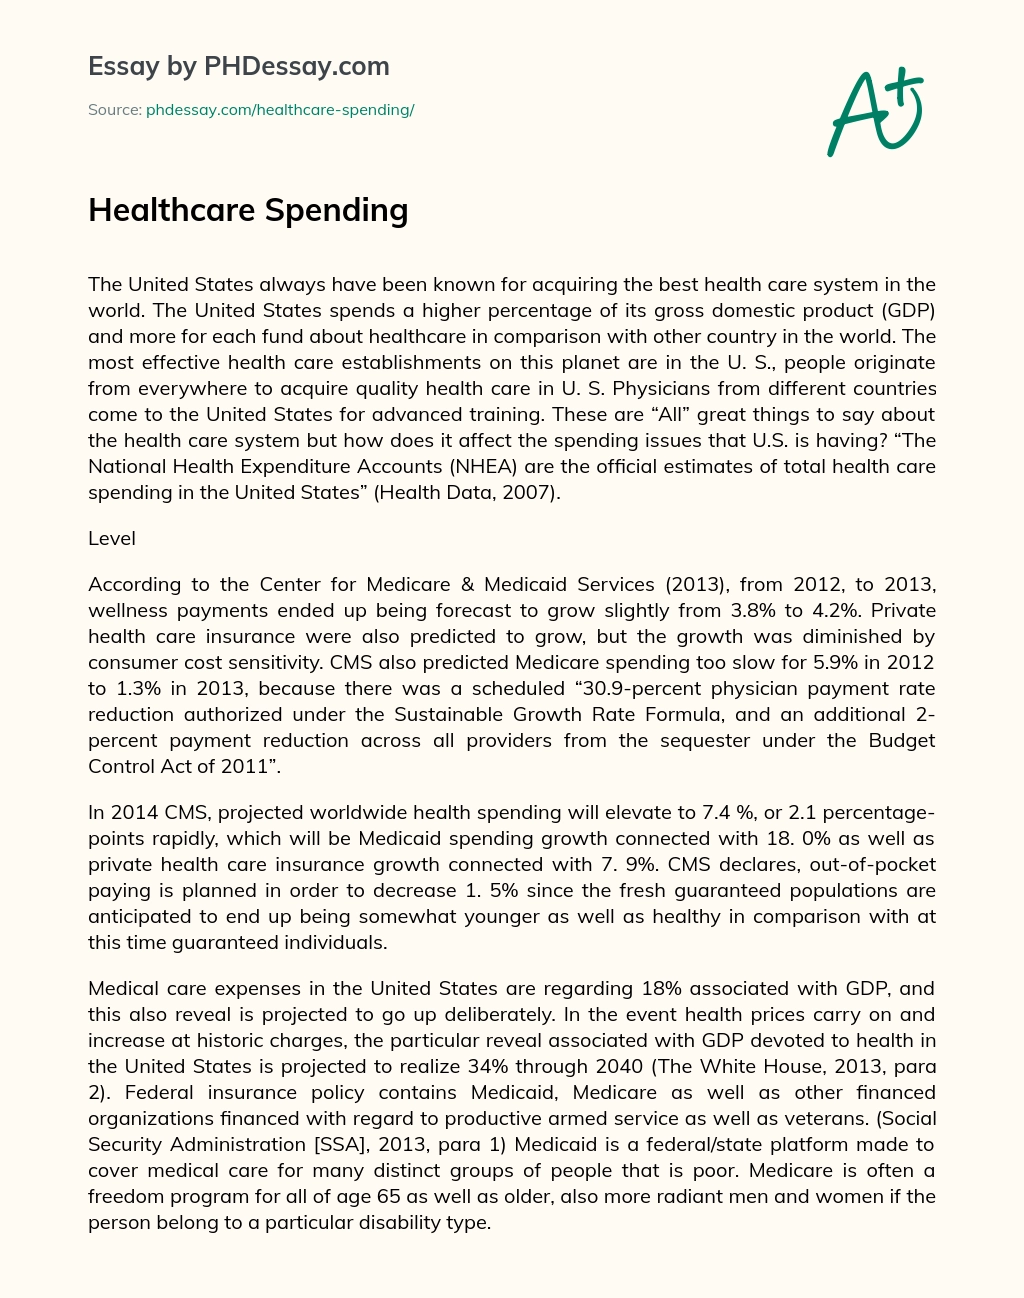 Healthcare Spending essay